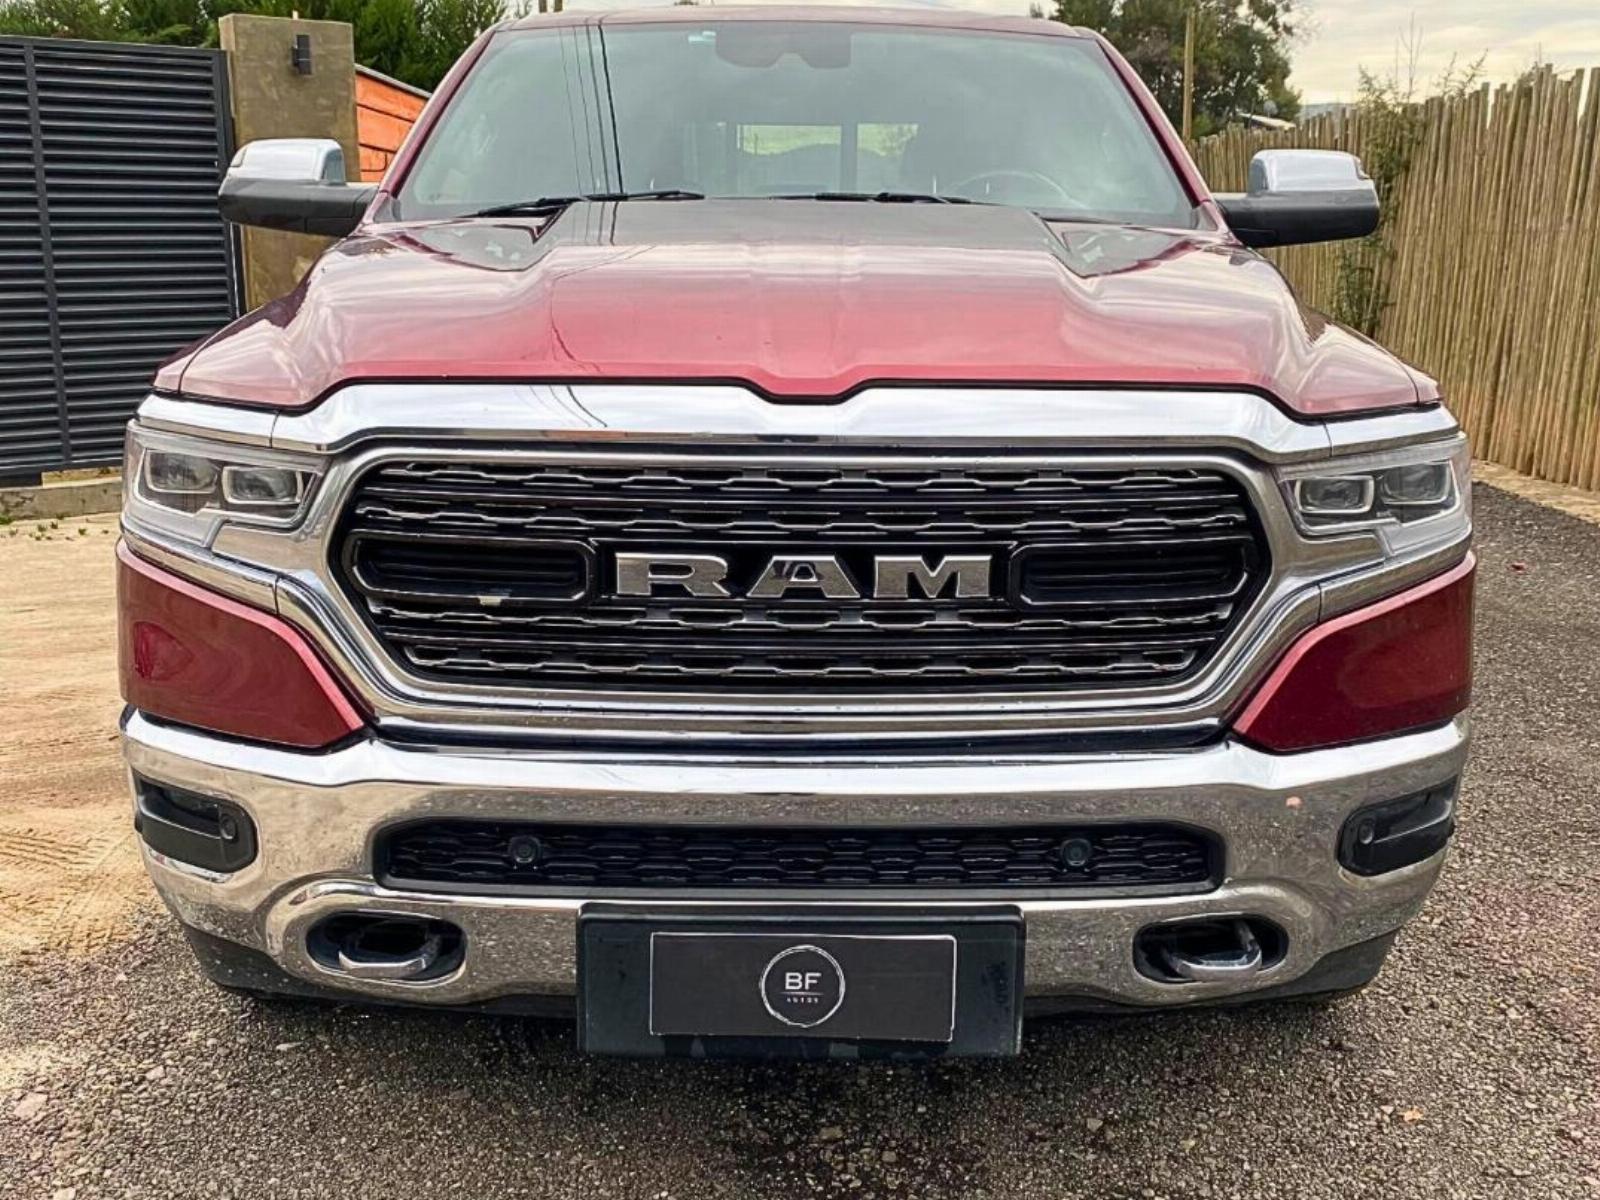 DODGE RAM 1500 LIMITED 2019 FACTURABLE, ÚNICO DUEÑO - FULL MOTOR